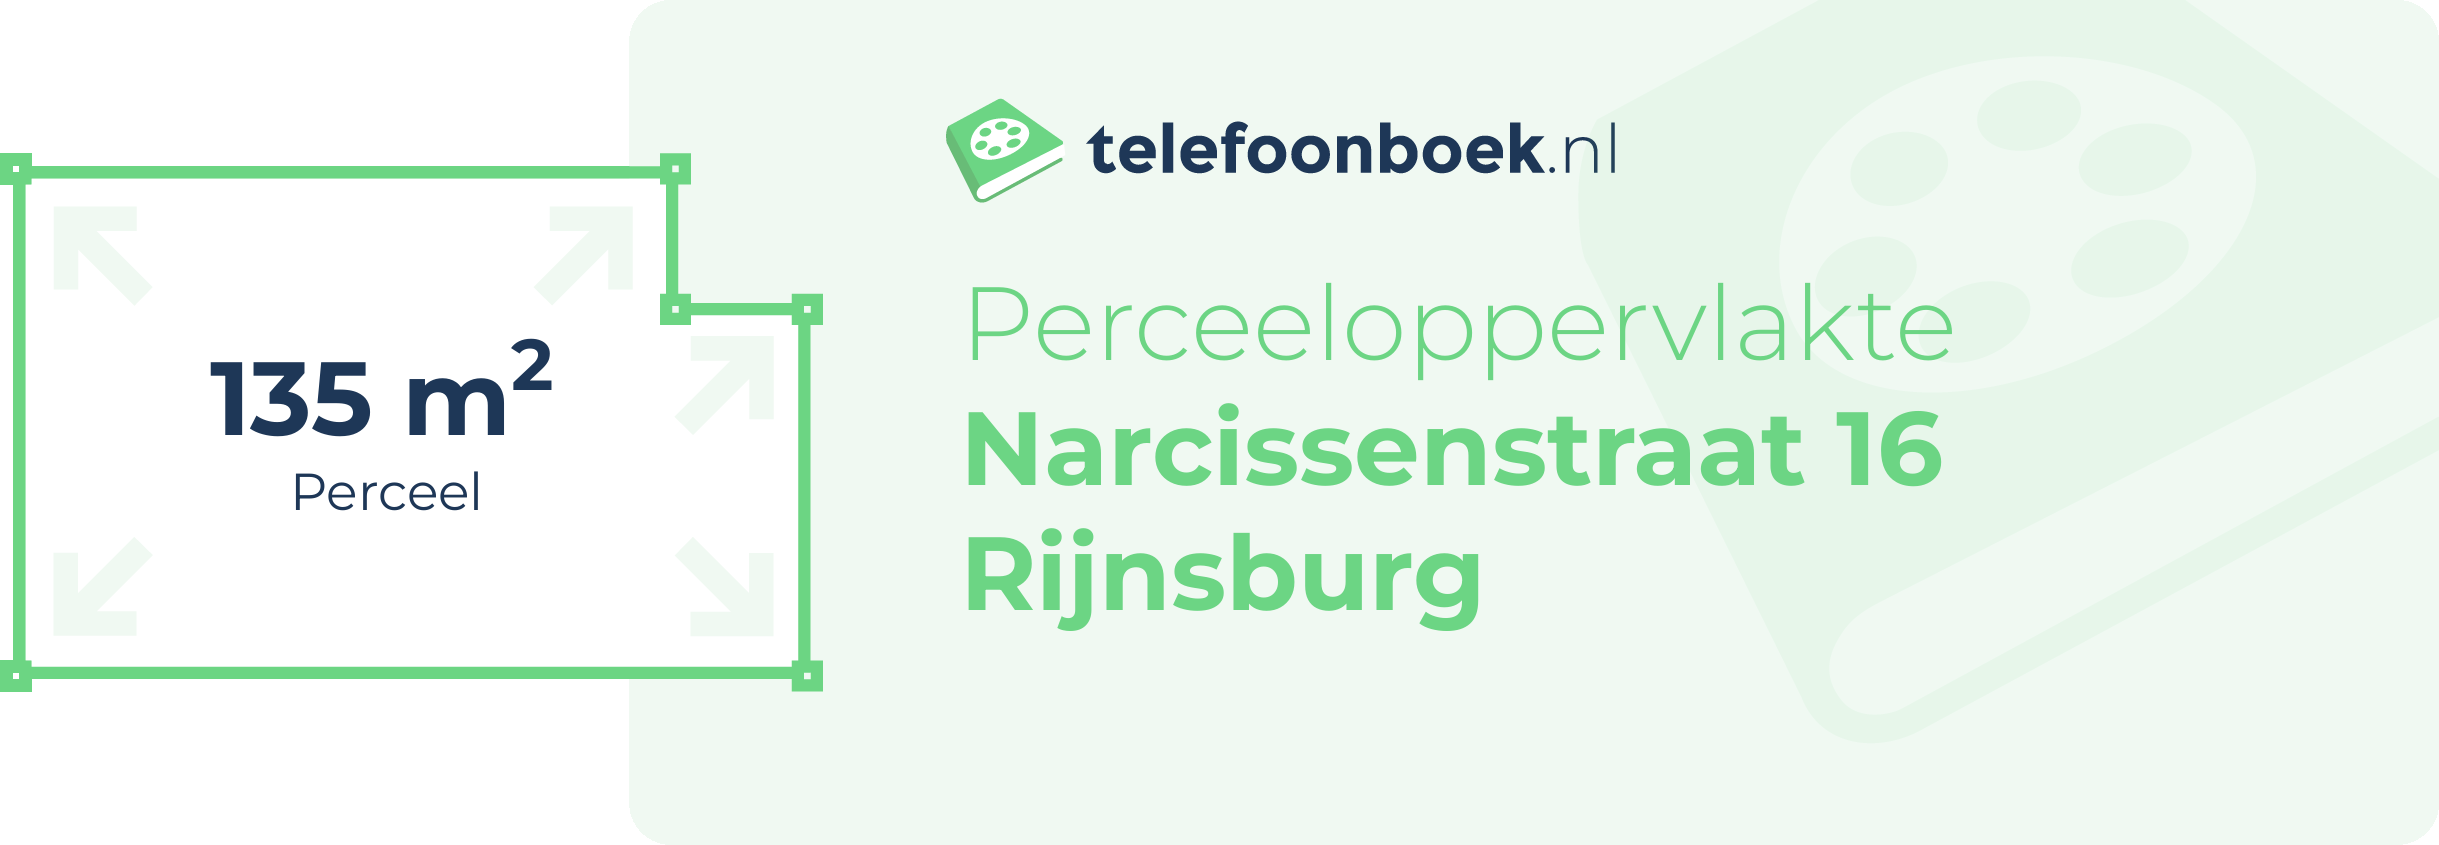 Perceeloppervlakte Narcissenstraat 16 Rijnsburg